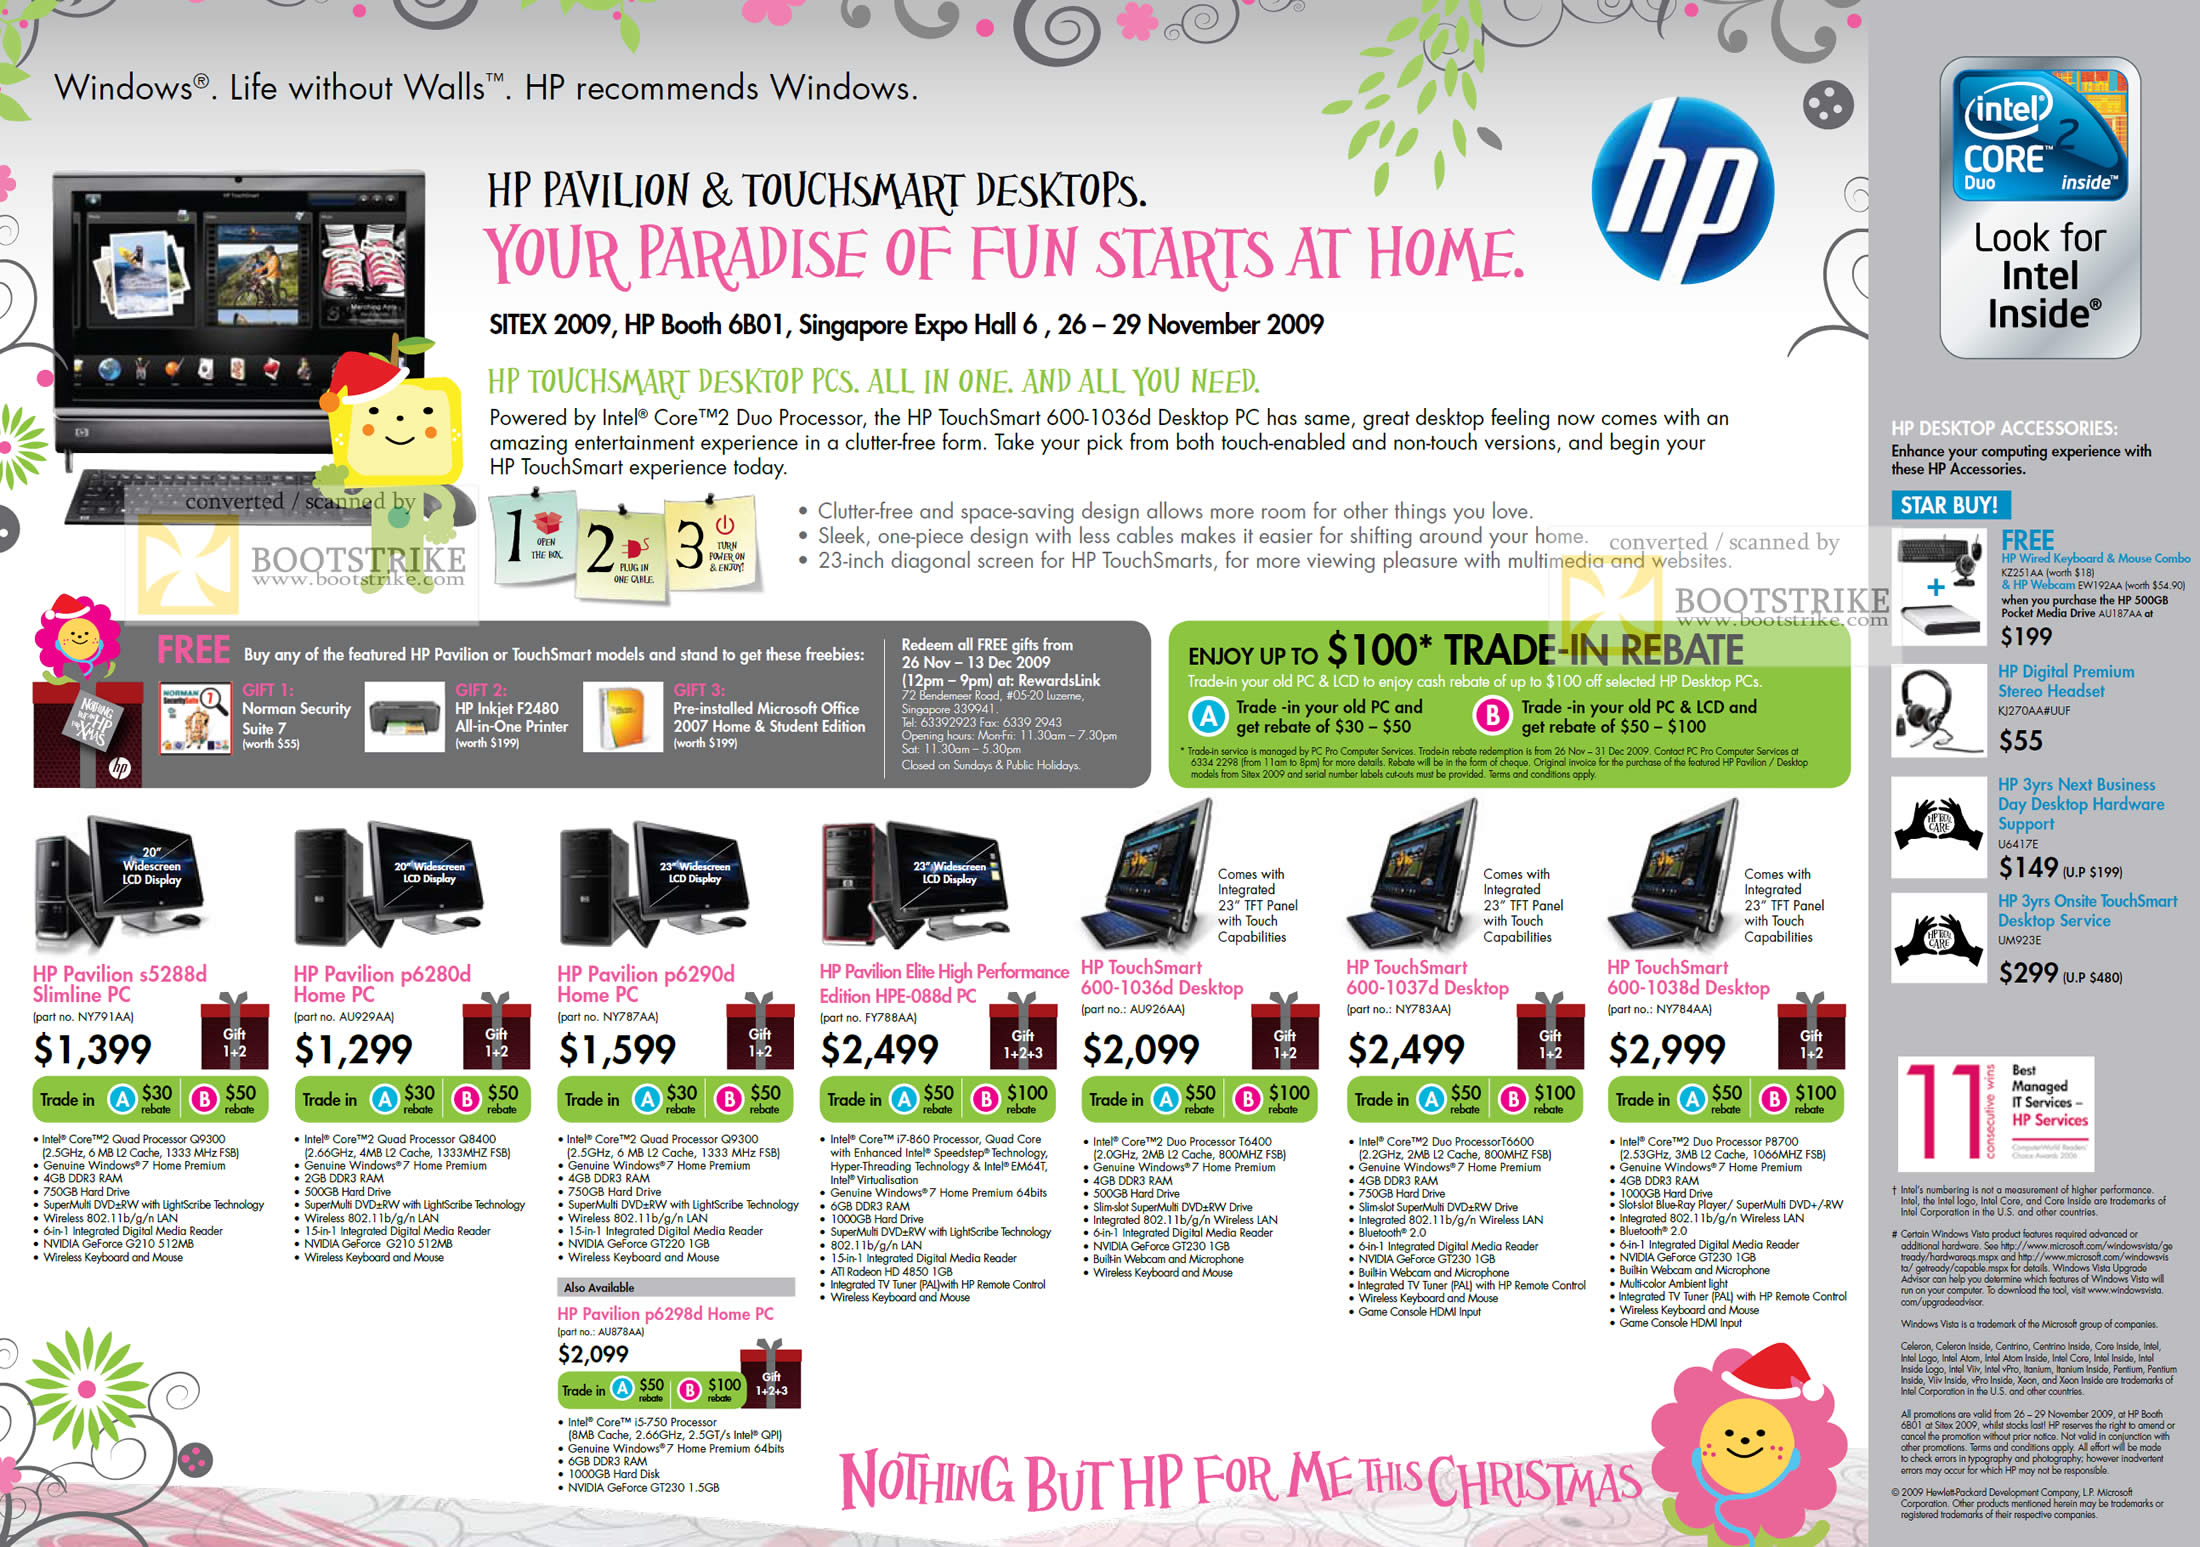 Sitex 2009 price list image brochure of HP Pavilion Touchsmart Desktop PC Slimline Elite 600 HPE